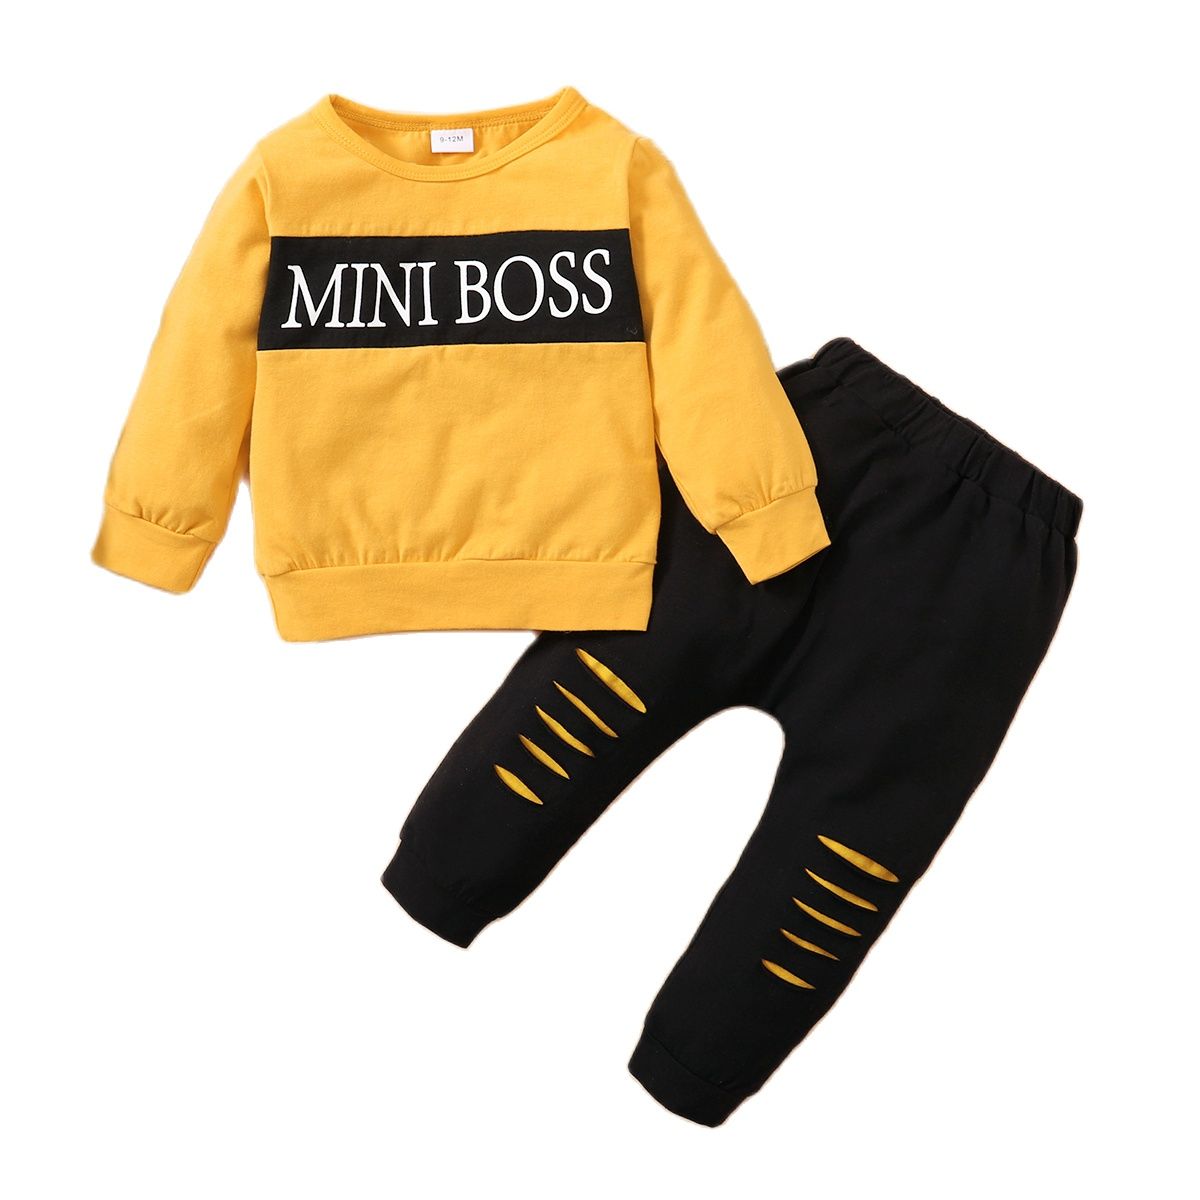 Mini Boss Outfit Set